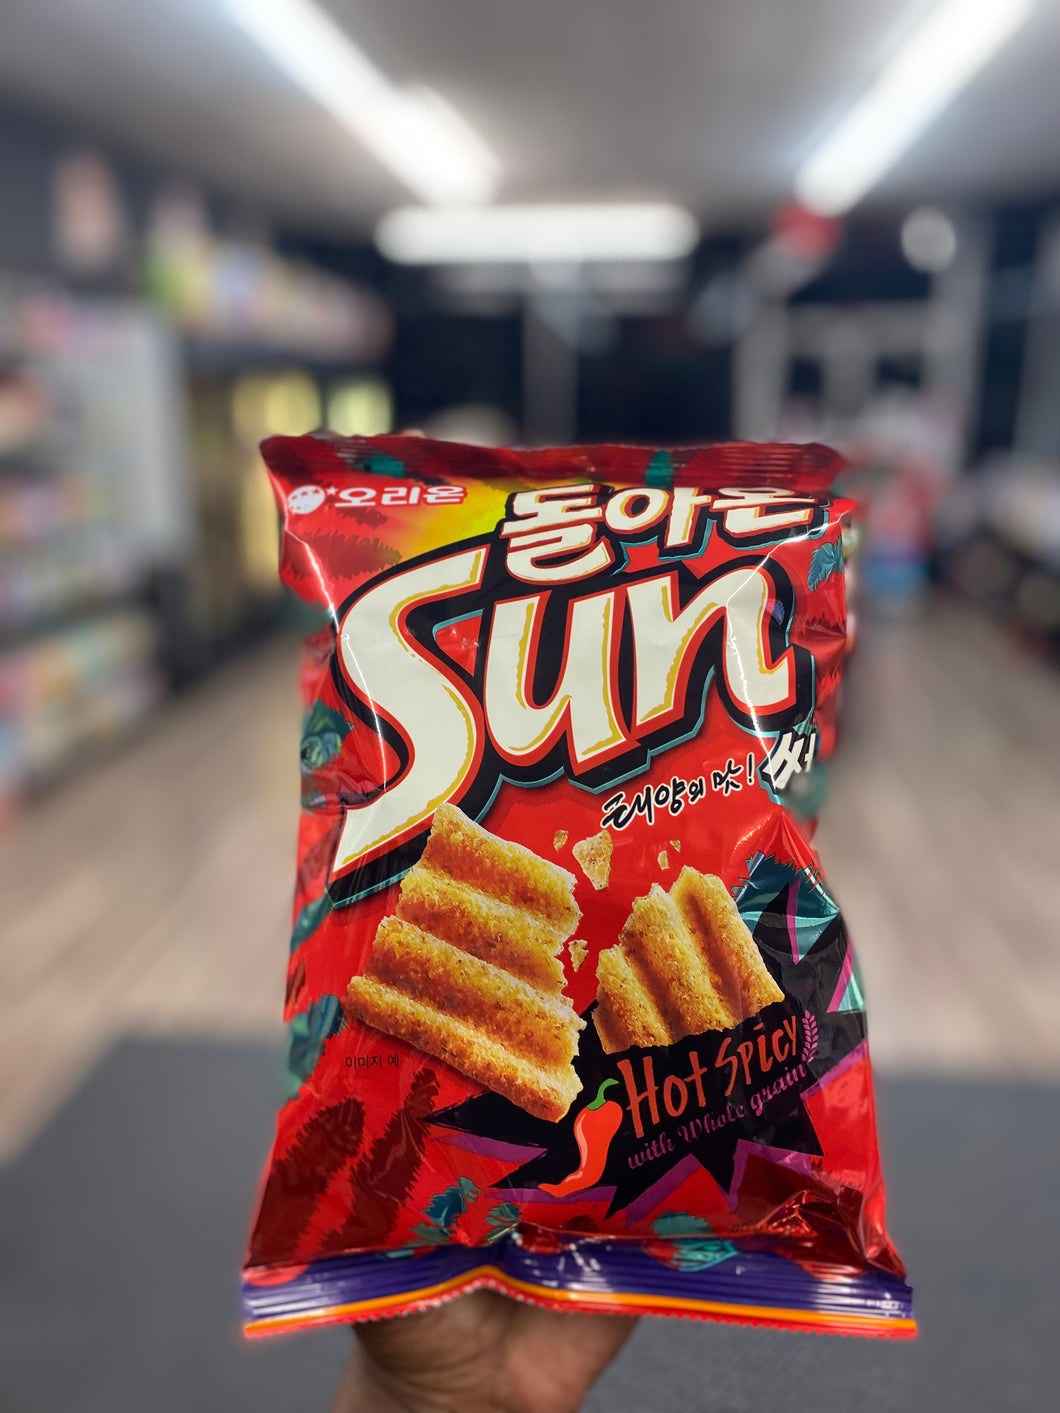 Sun Chips Hot & spicy ( Korea)